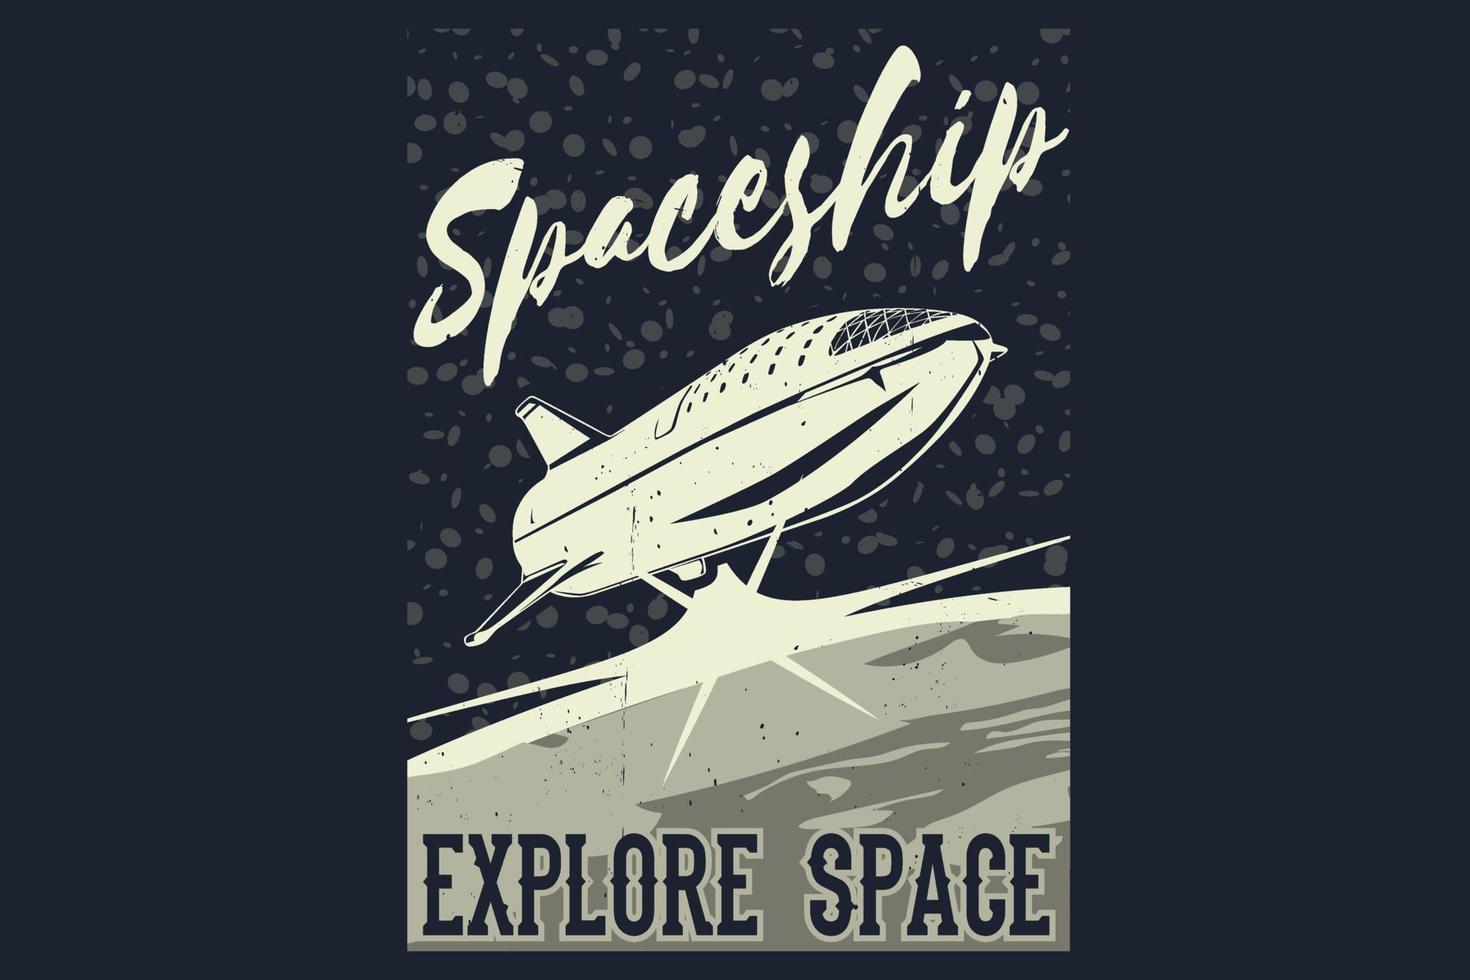 nave espacial explorar diseño de silueta de espacio vector